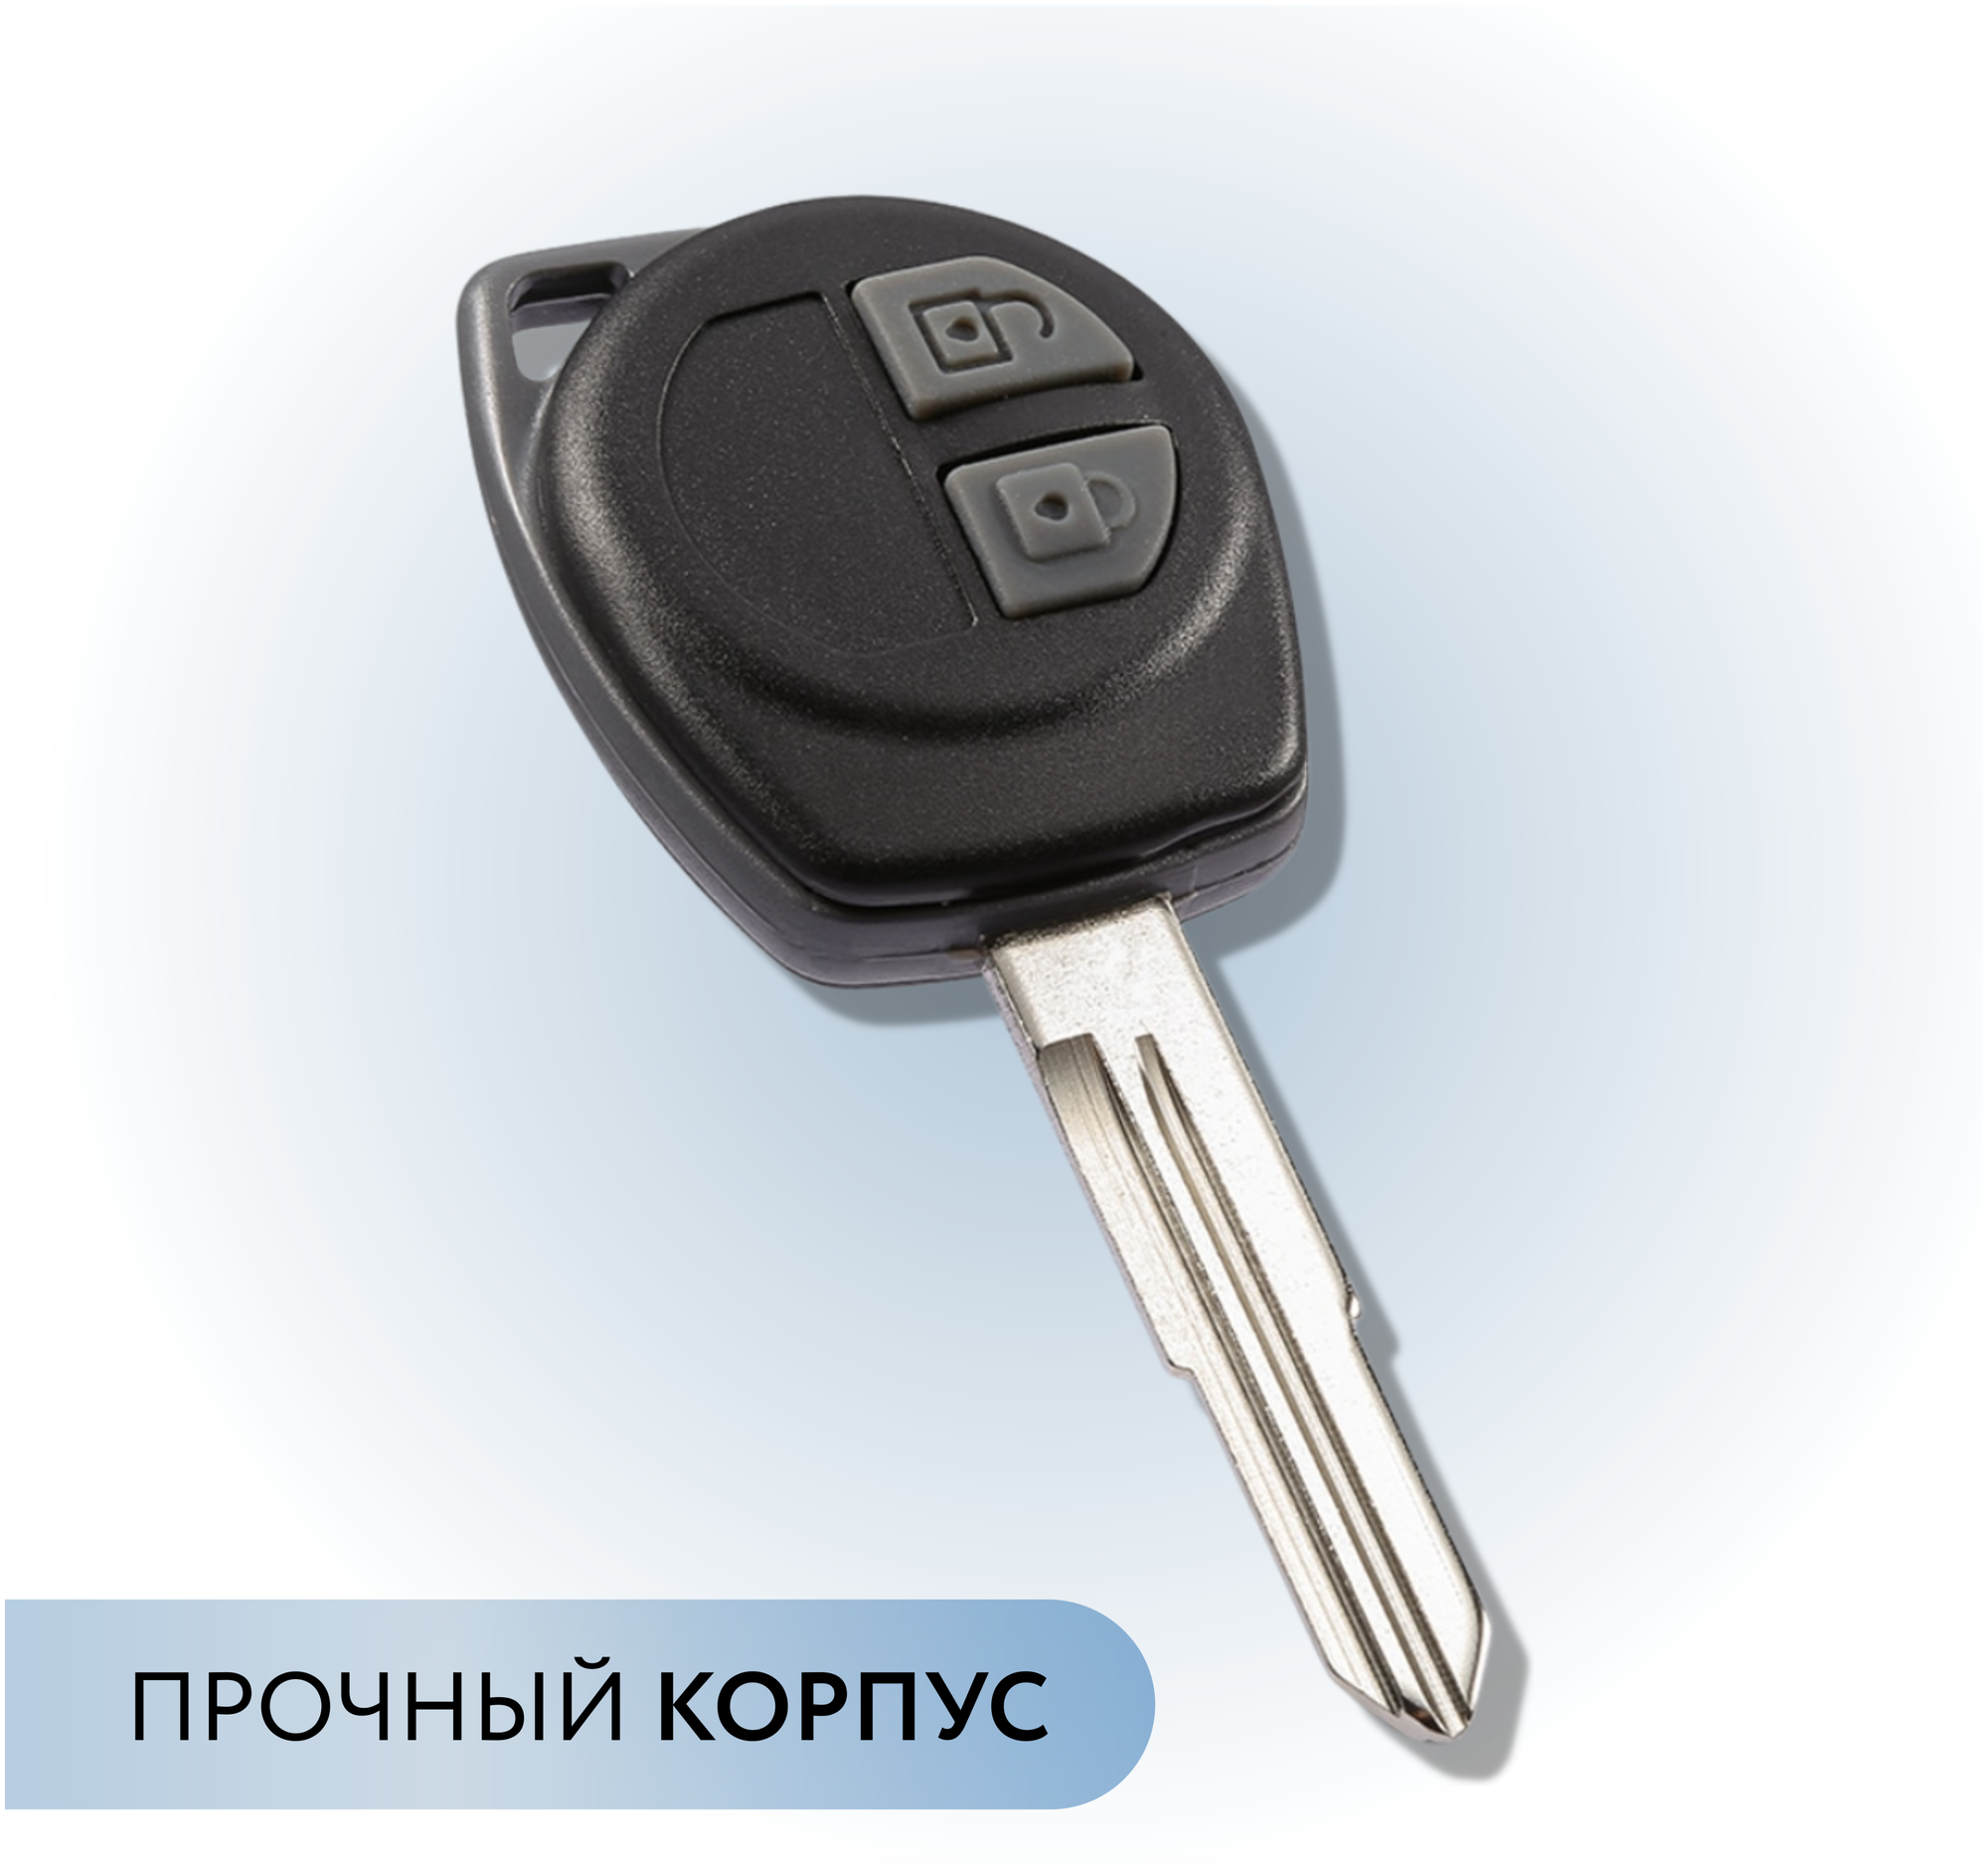 Корпус ключа зажигания для Сузуки корпус ключа для Suzuki лезвие TOY43